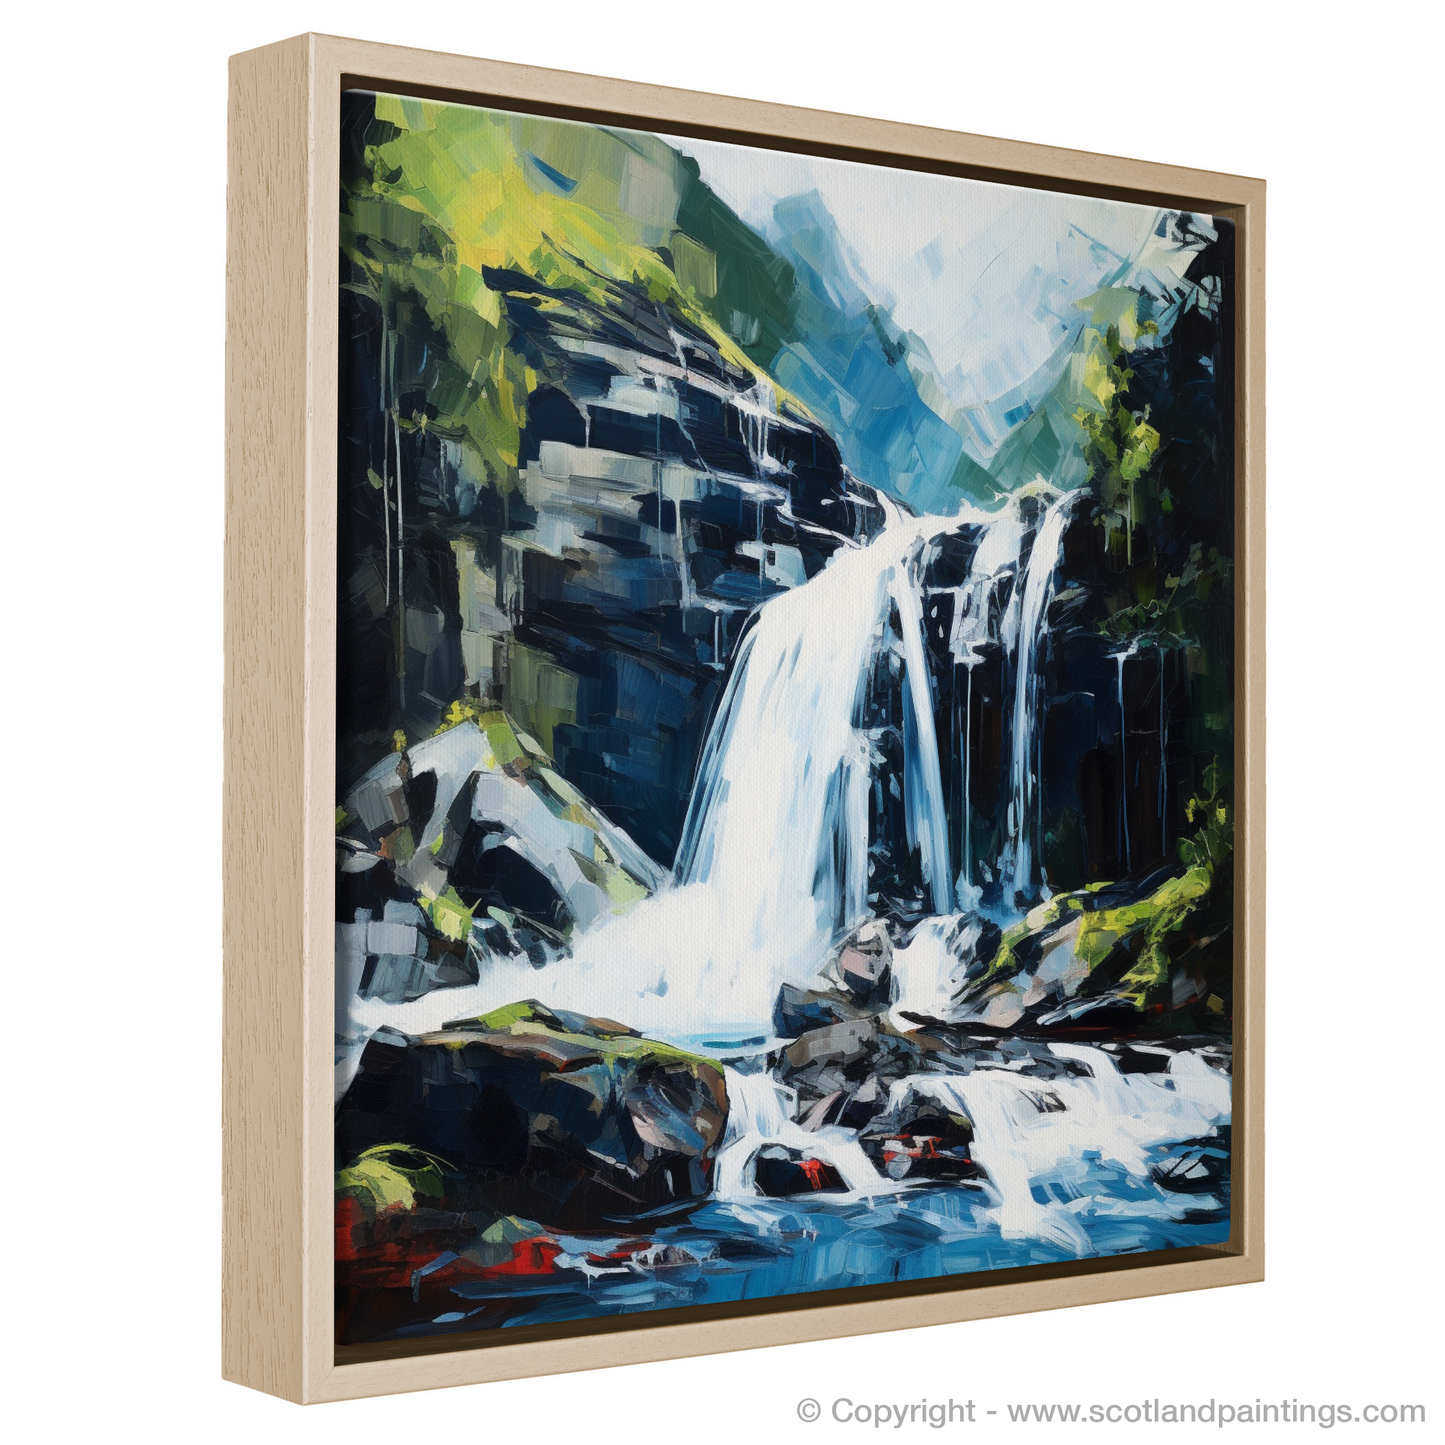 Painting and Art Print of Cascading waterfall in Glencoe entitled "Cascading Rhapsody of Glencoe".